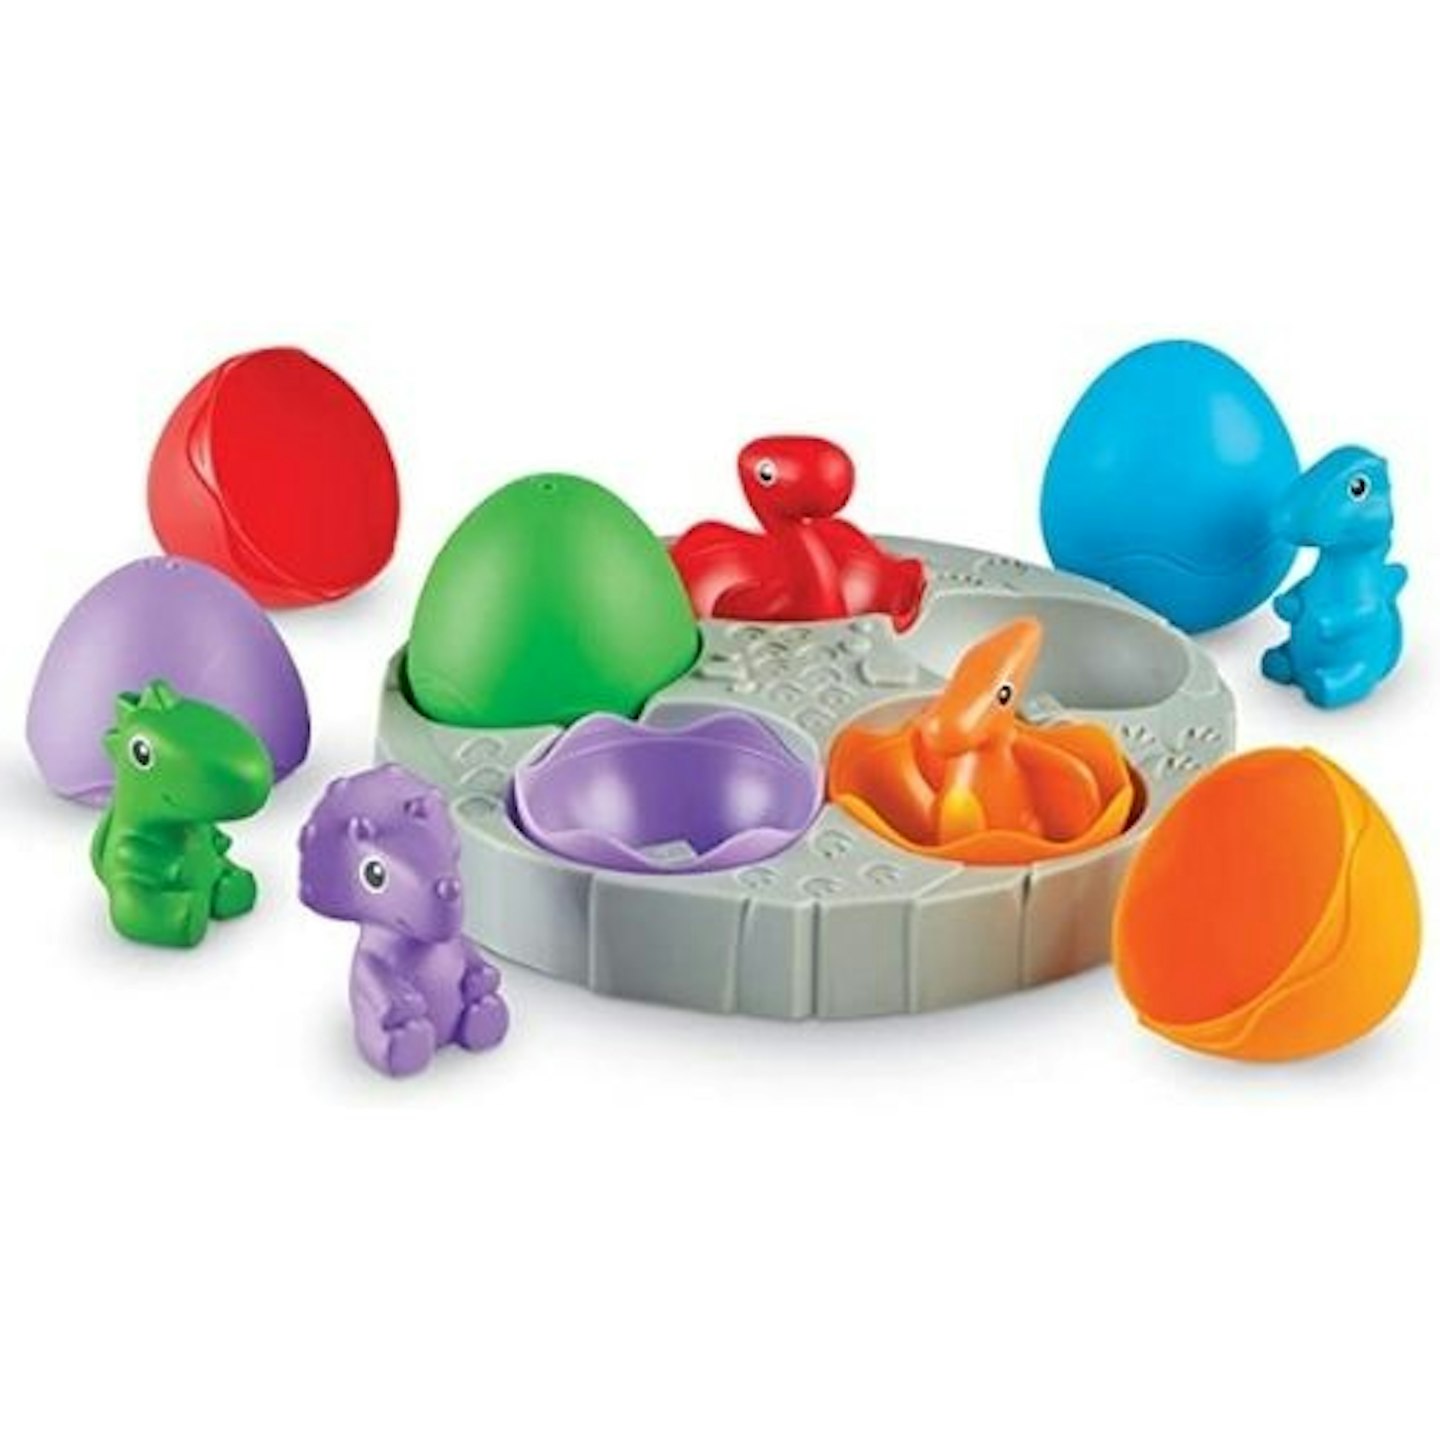 Babysaurs Sorting Set - Best Dinosaur Toys